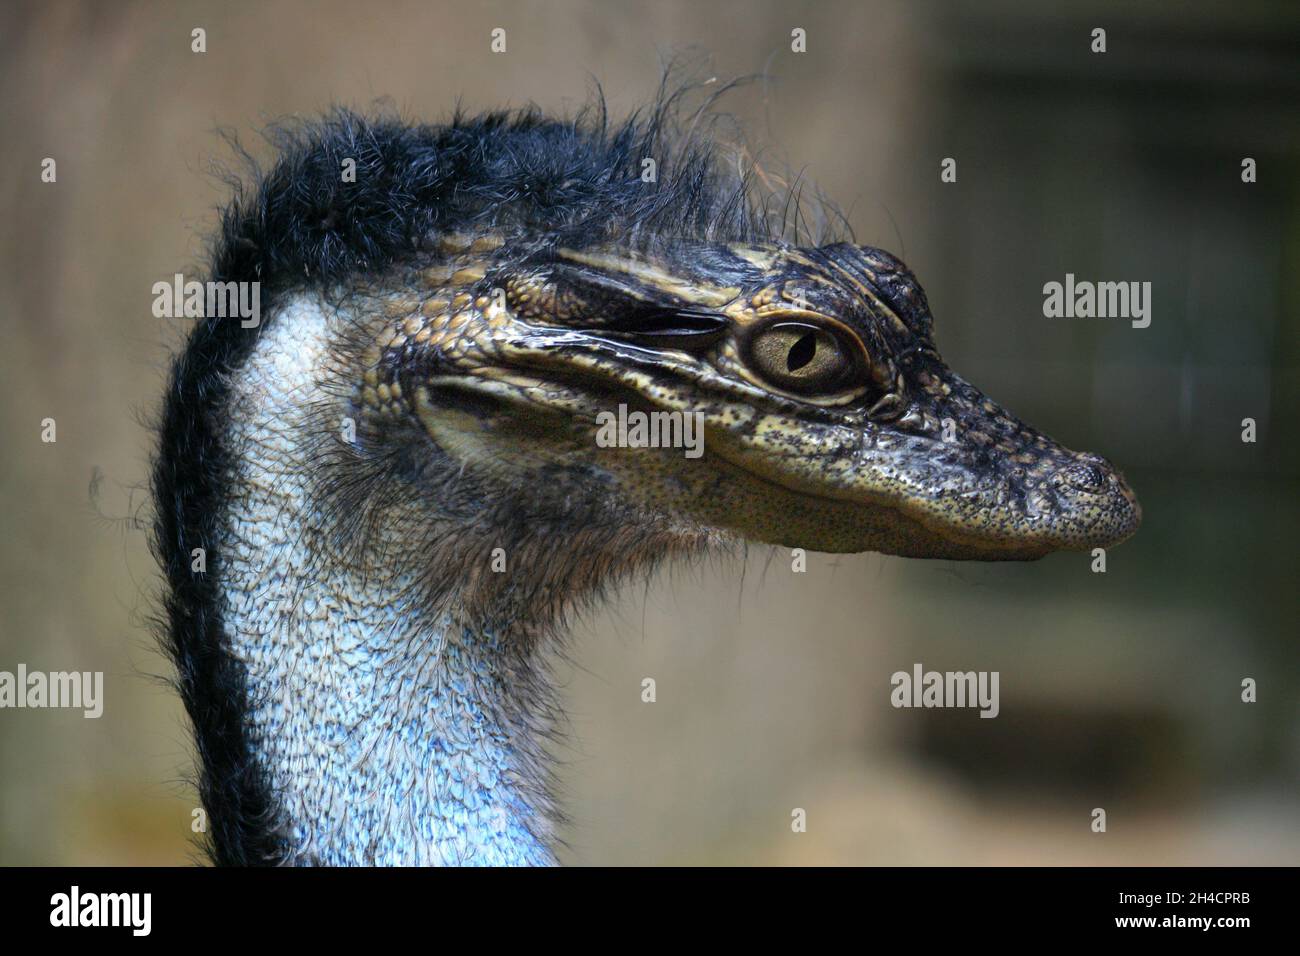 Closeup shot of an animal with a lizard head and a bird body Stock Photo